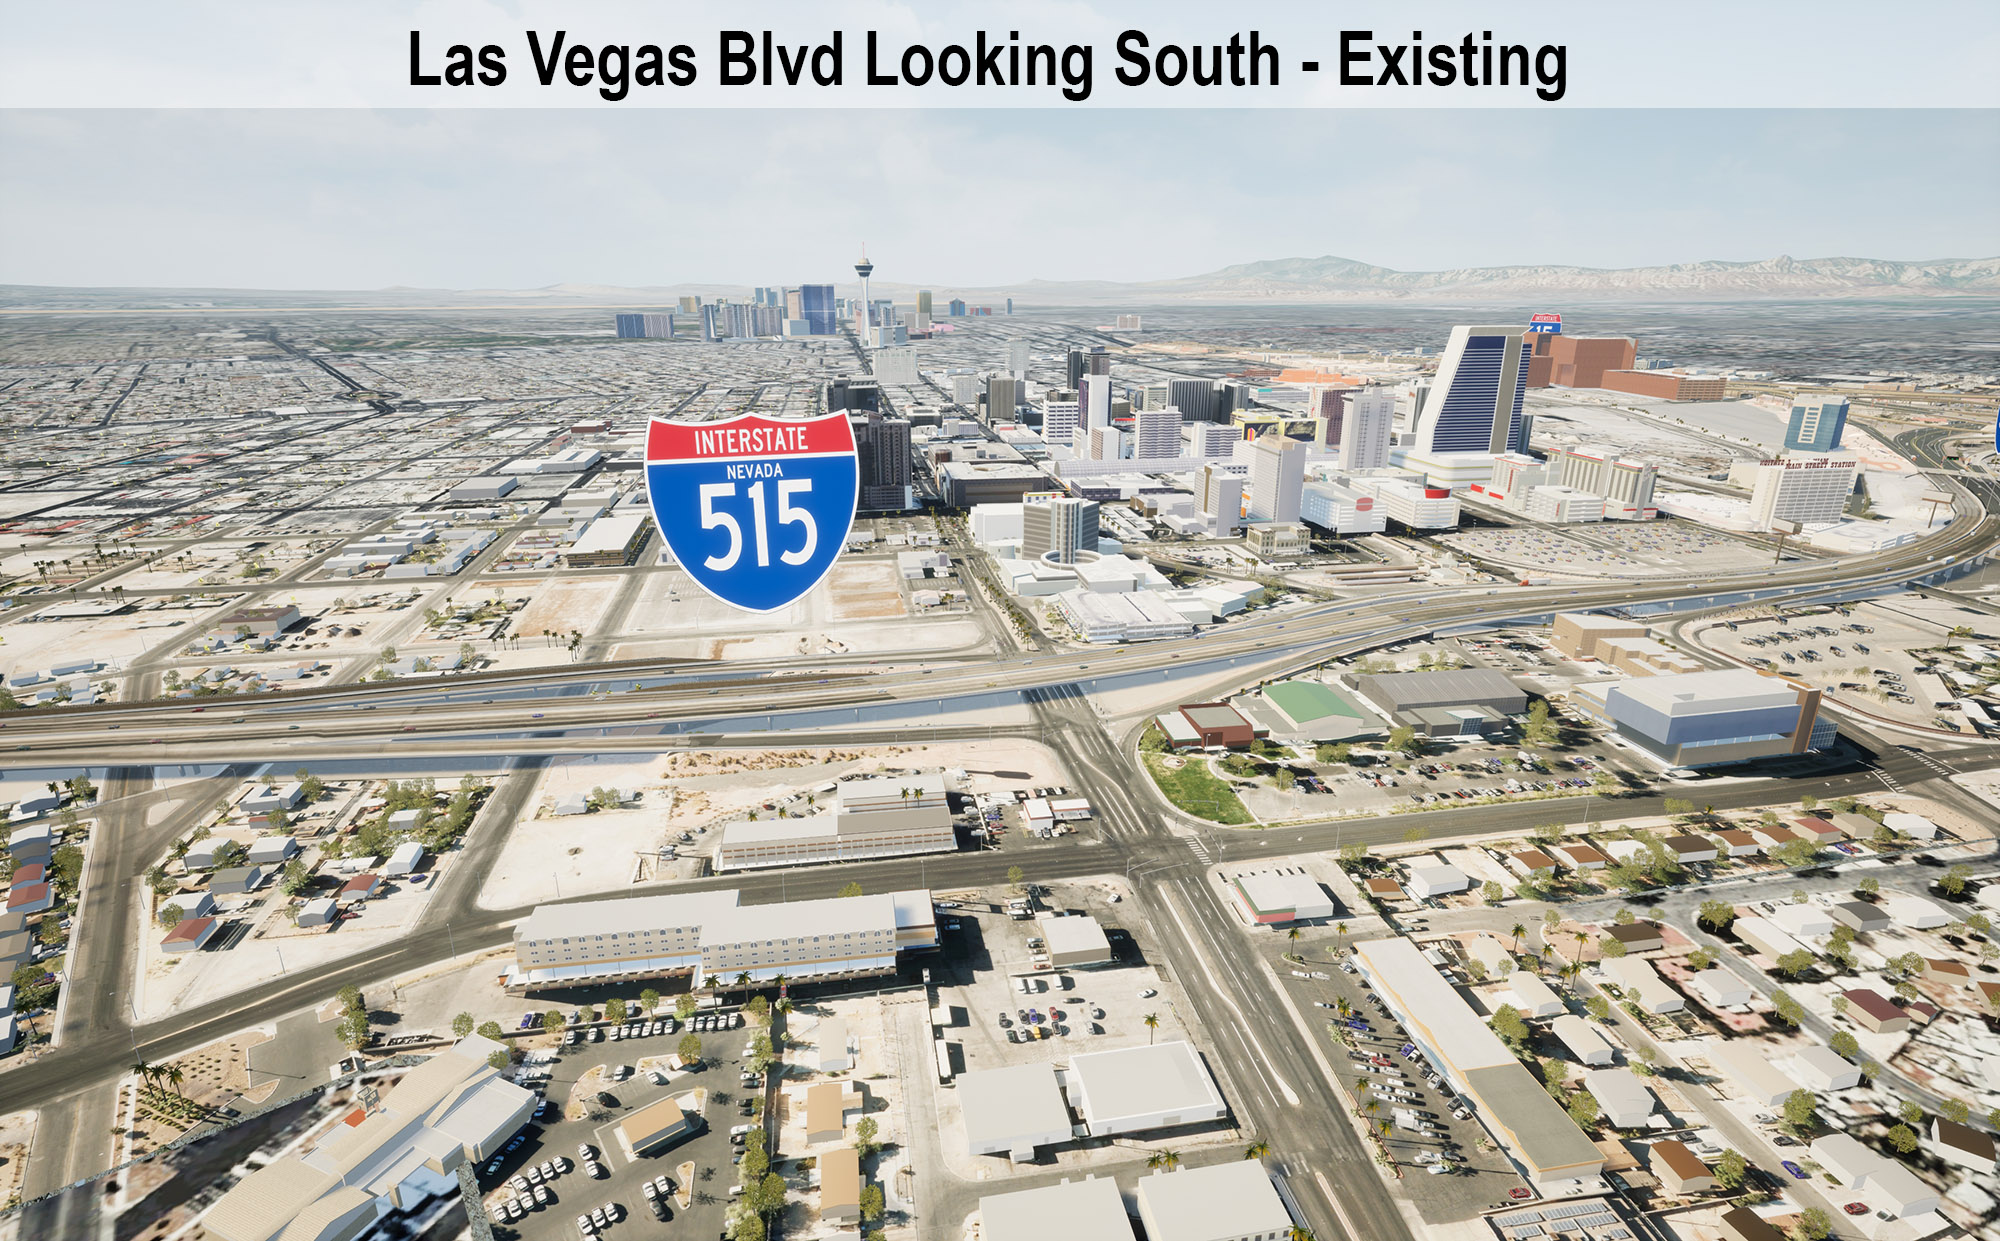 Las Vegas Blvd Looking South - Existing